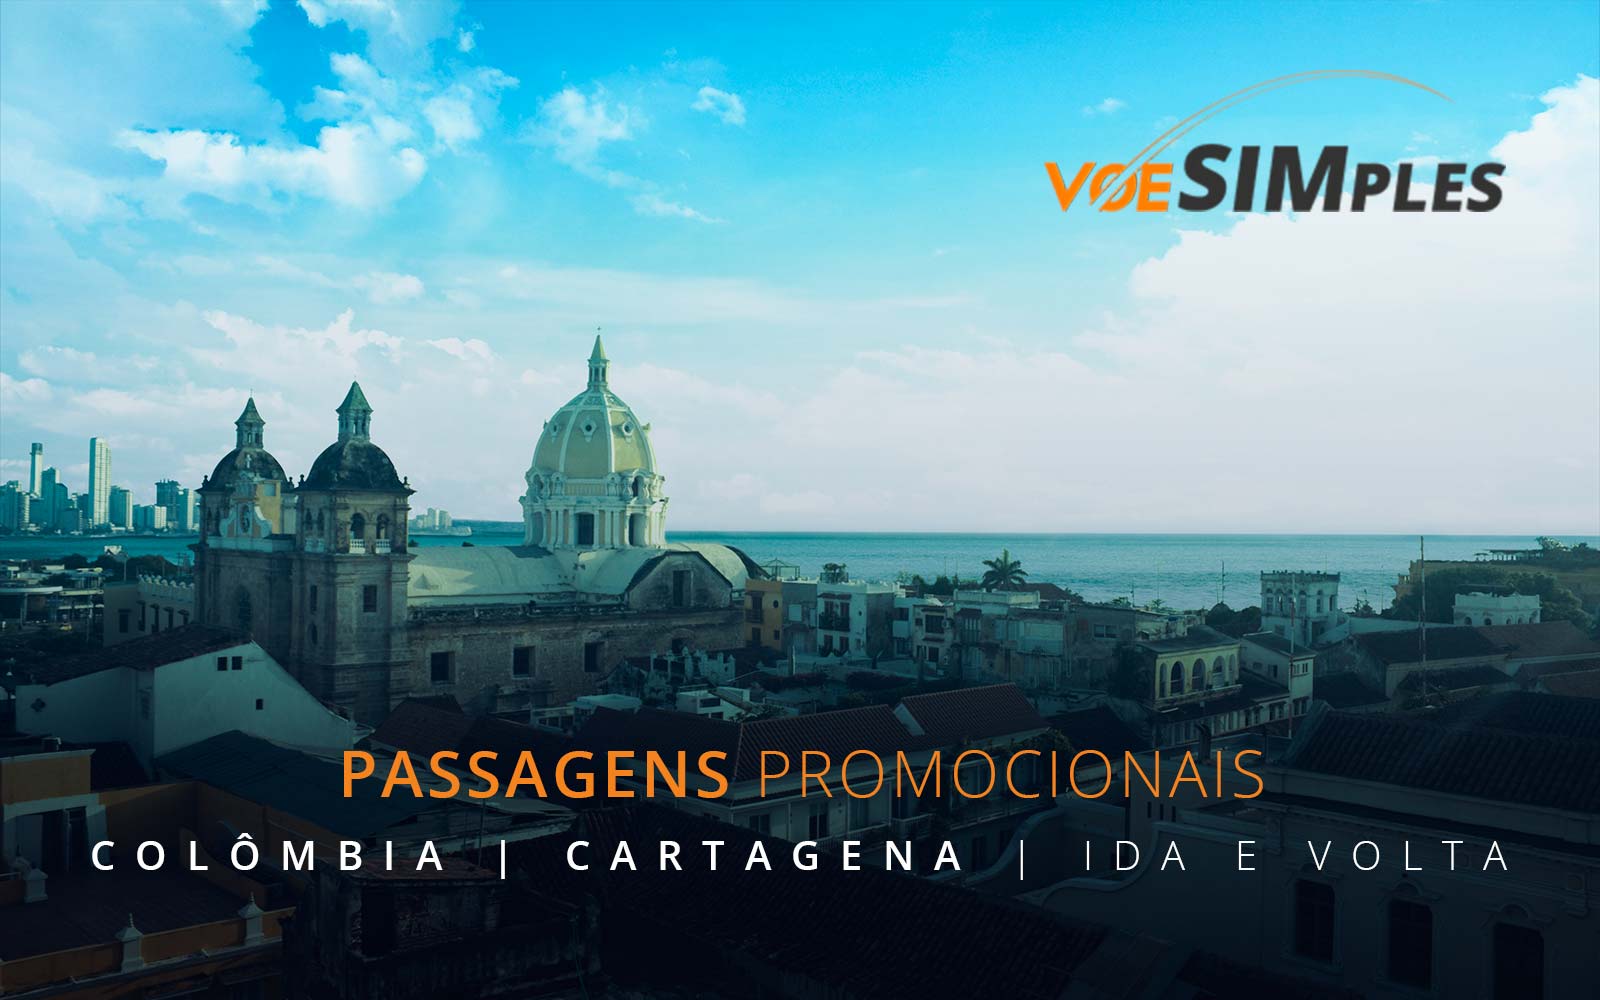 passagens-aereas-promocionais-america-sul-voe-simples-passagens-aereas-baratas-promocao-passagem-aviao-passagens-aereas-brasil-colombia-cartagena